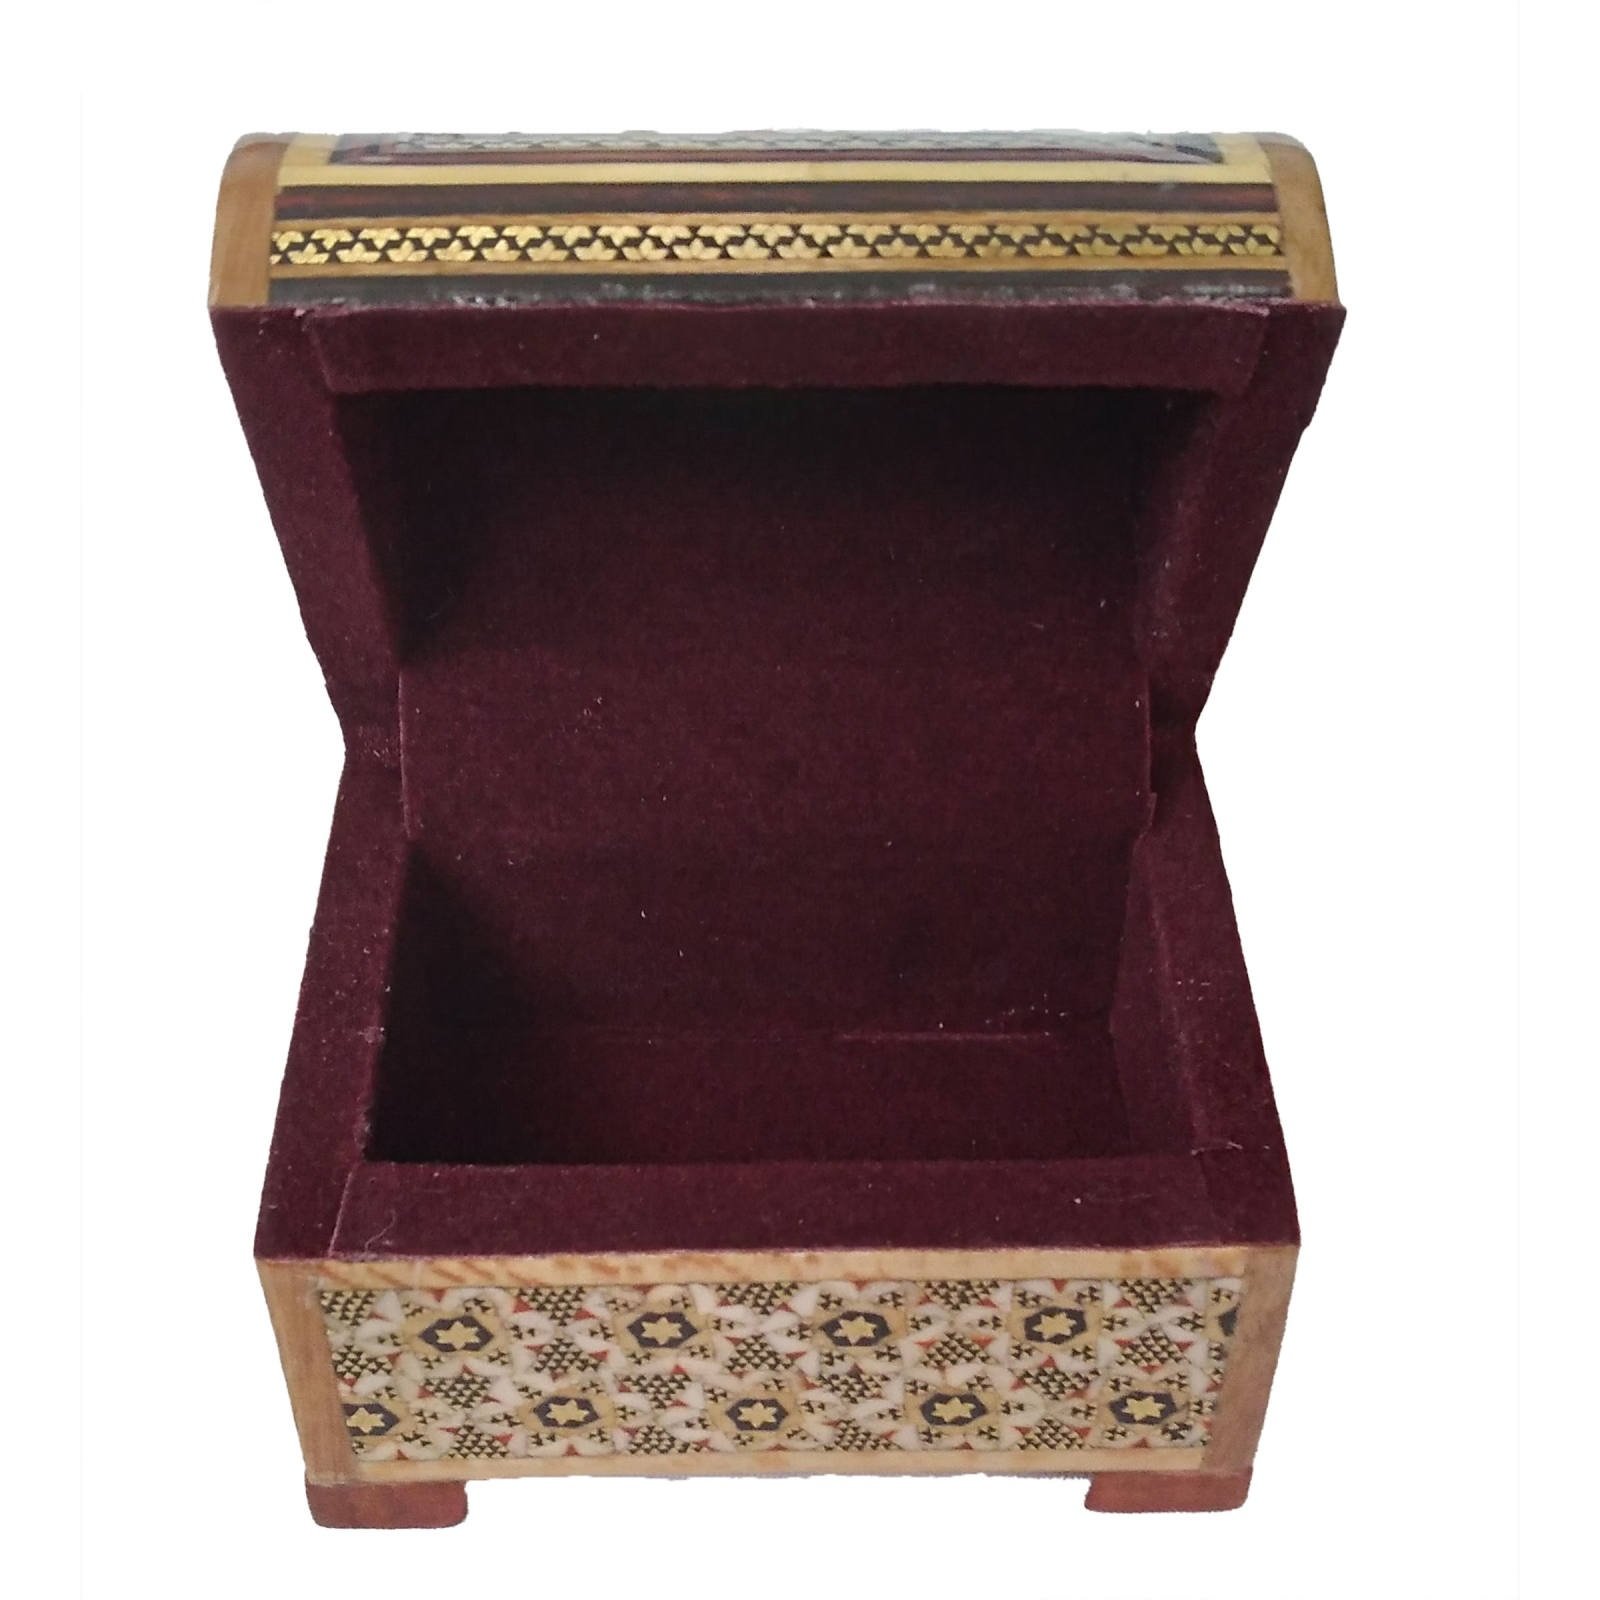 Khatam Jewelry box model sandoghcheh Code 23 , Khatam box, Inlaid, Khatam Jewelry box, Khatam